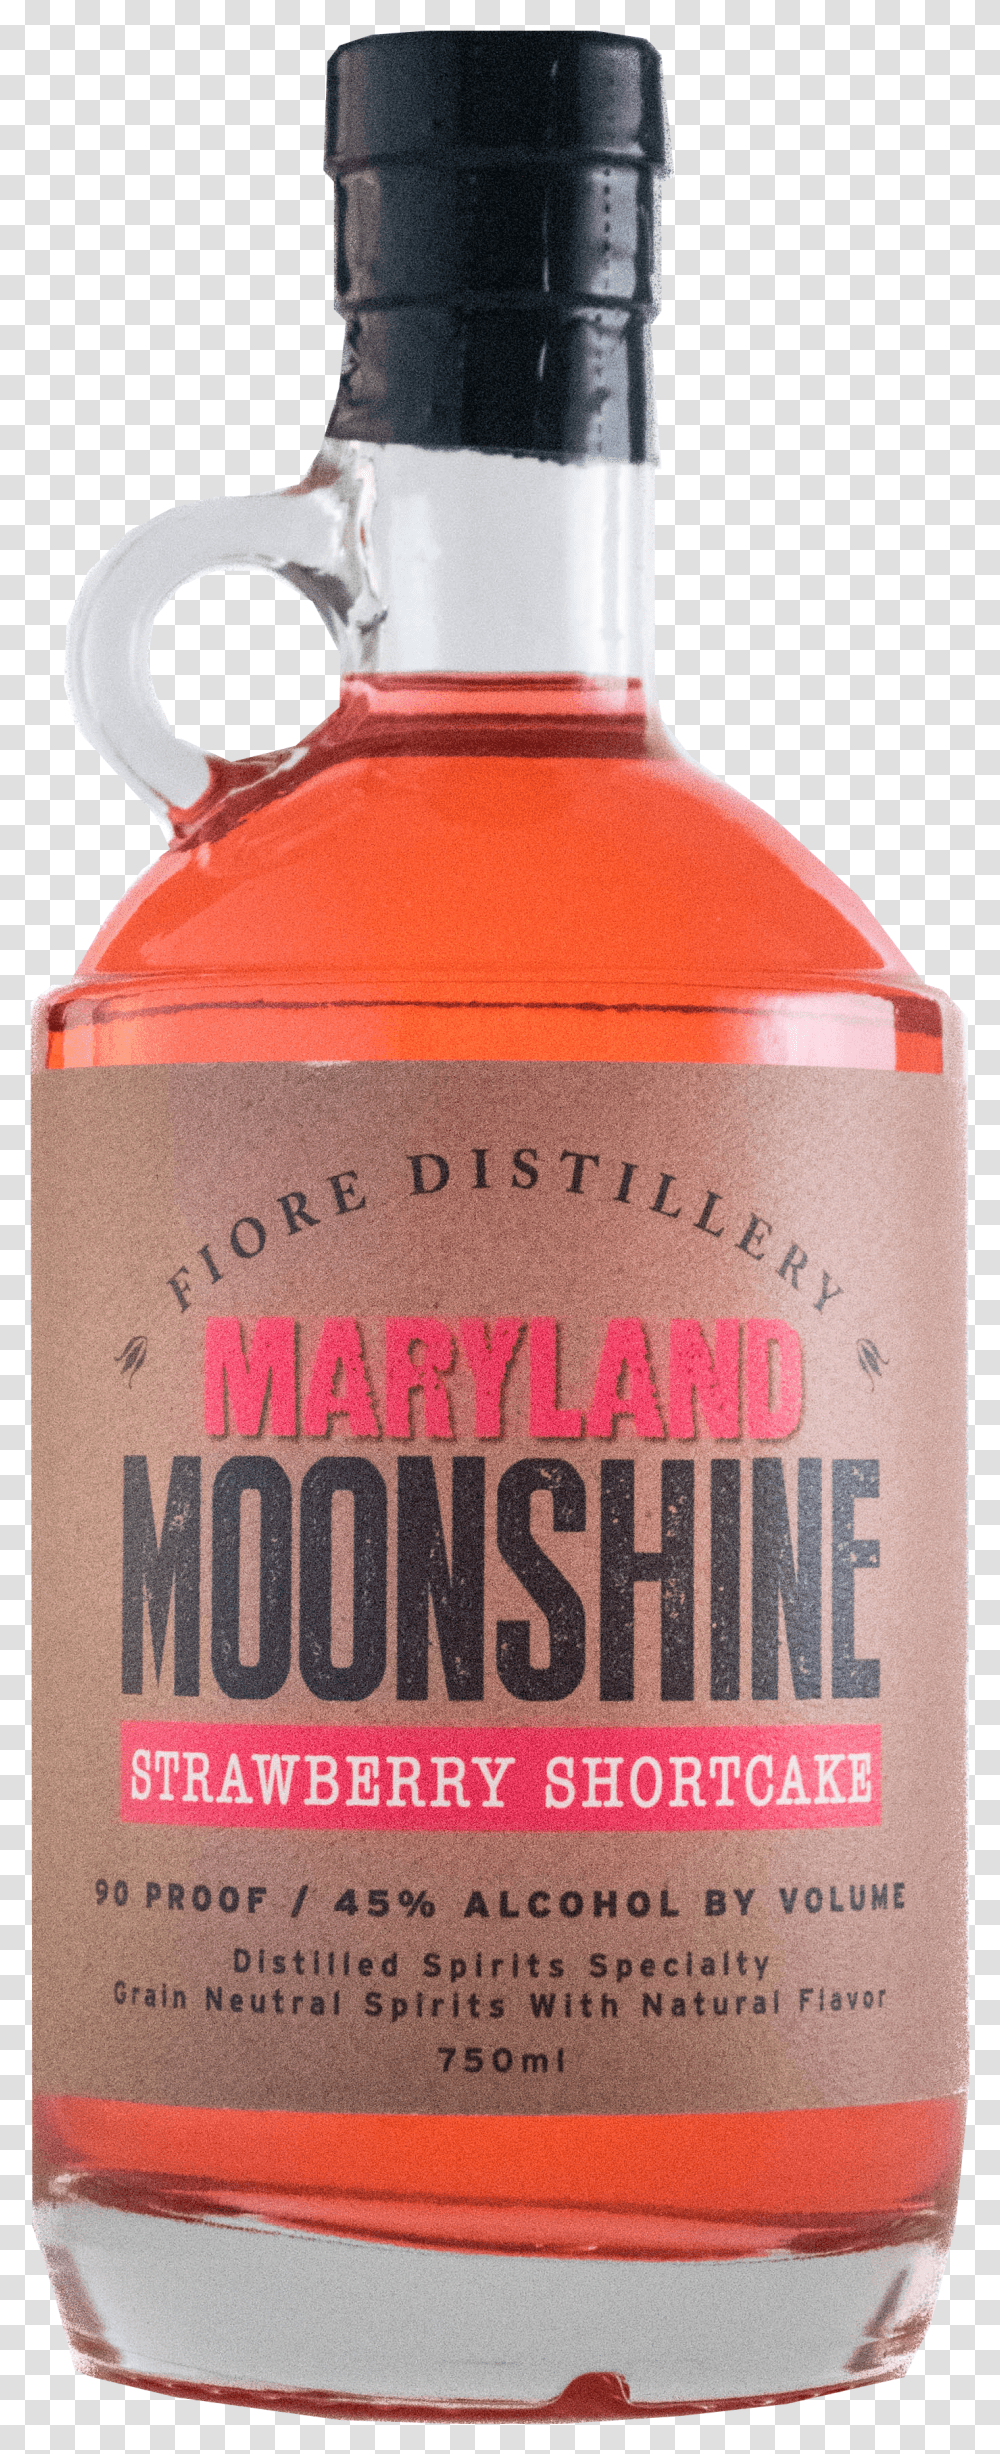 Maryland Moonshine Strawberry Shortcake Transparent Png